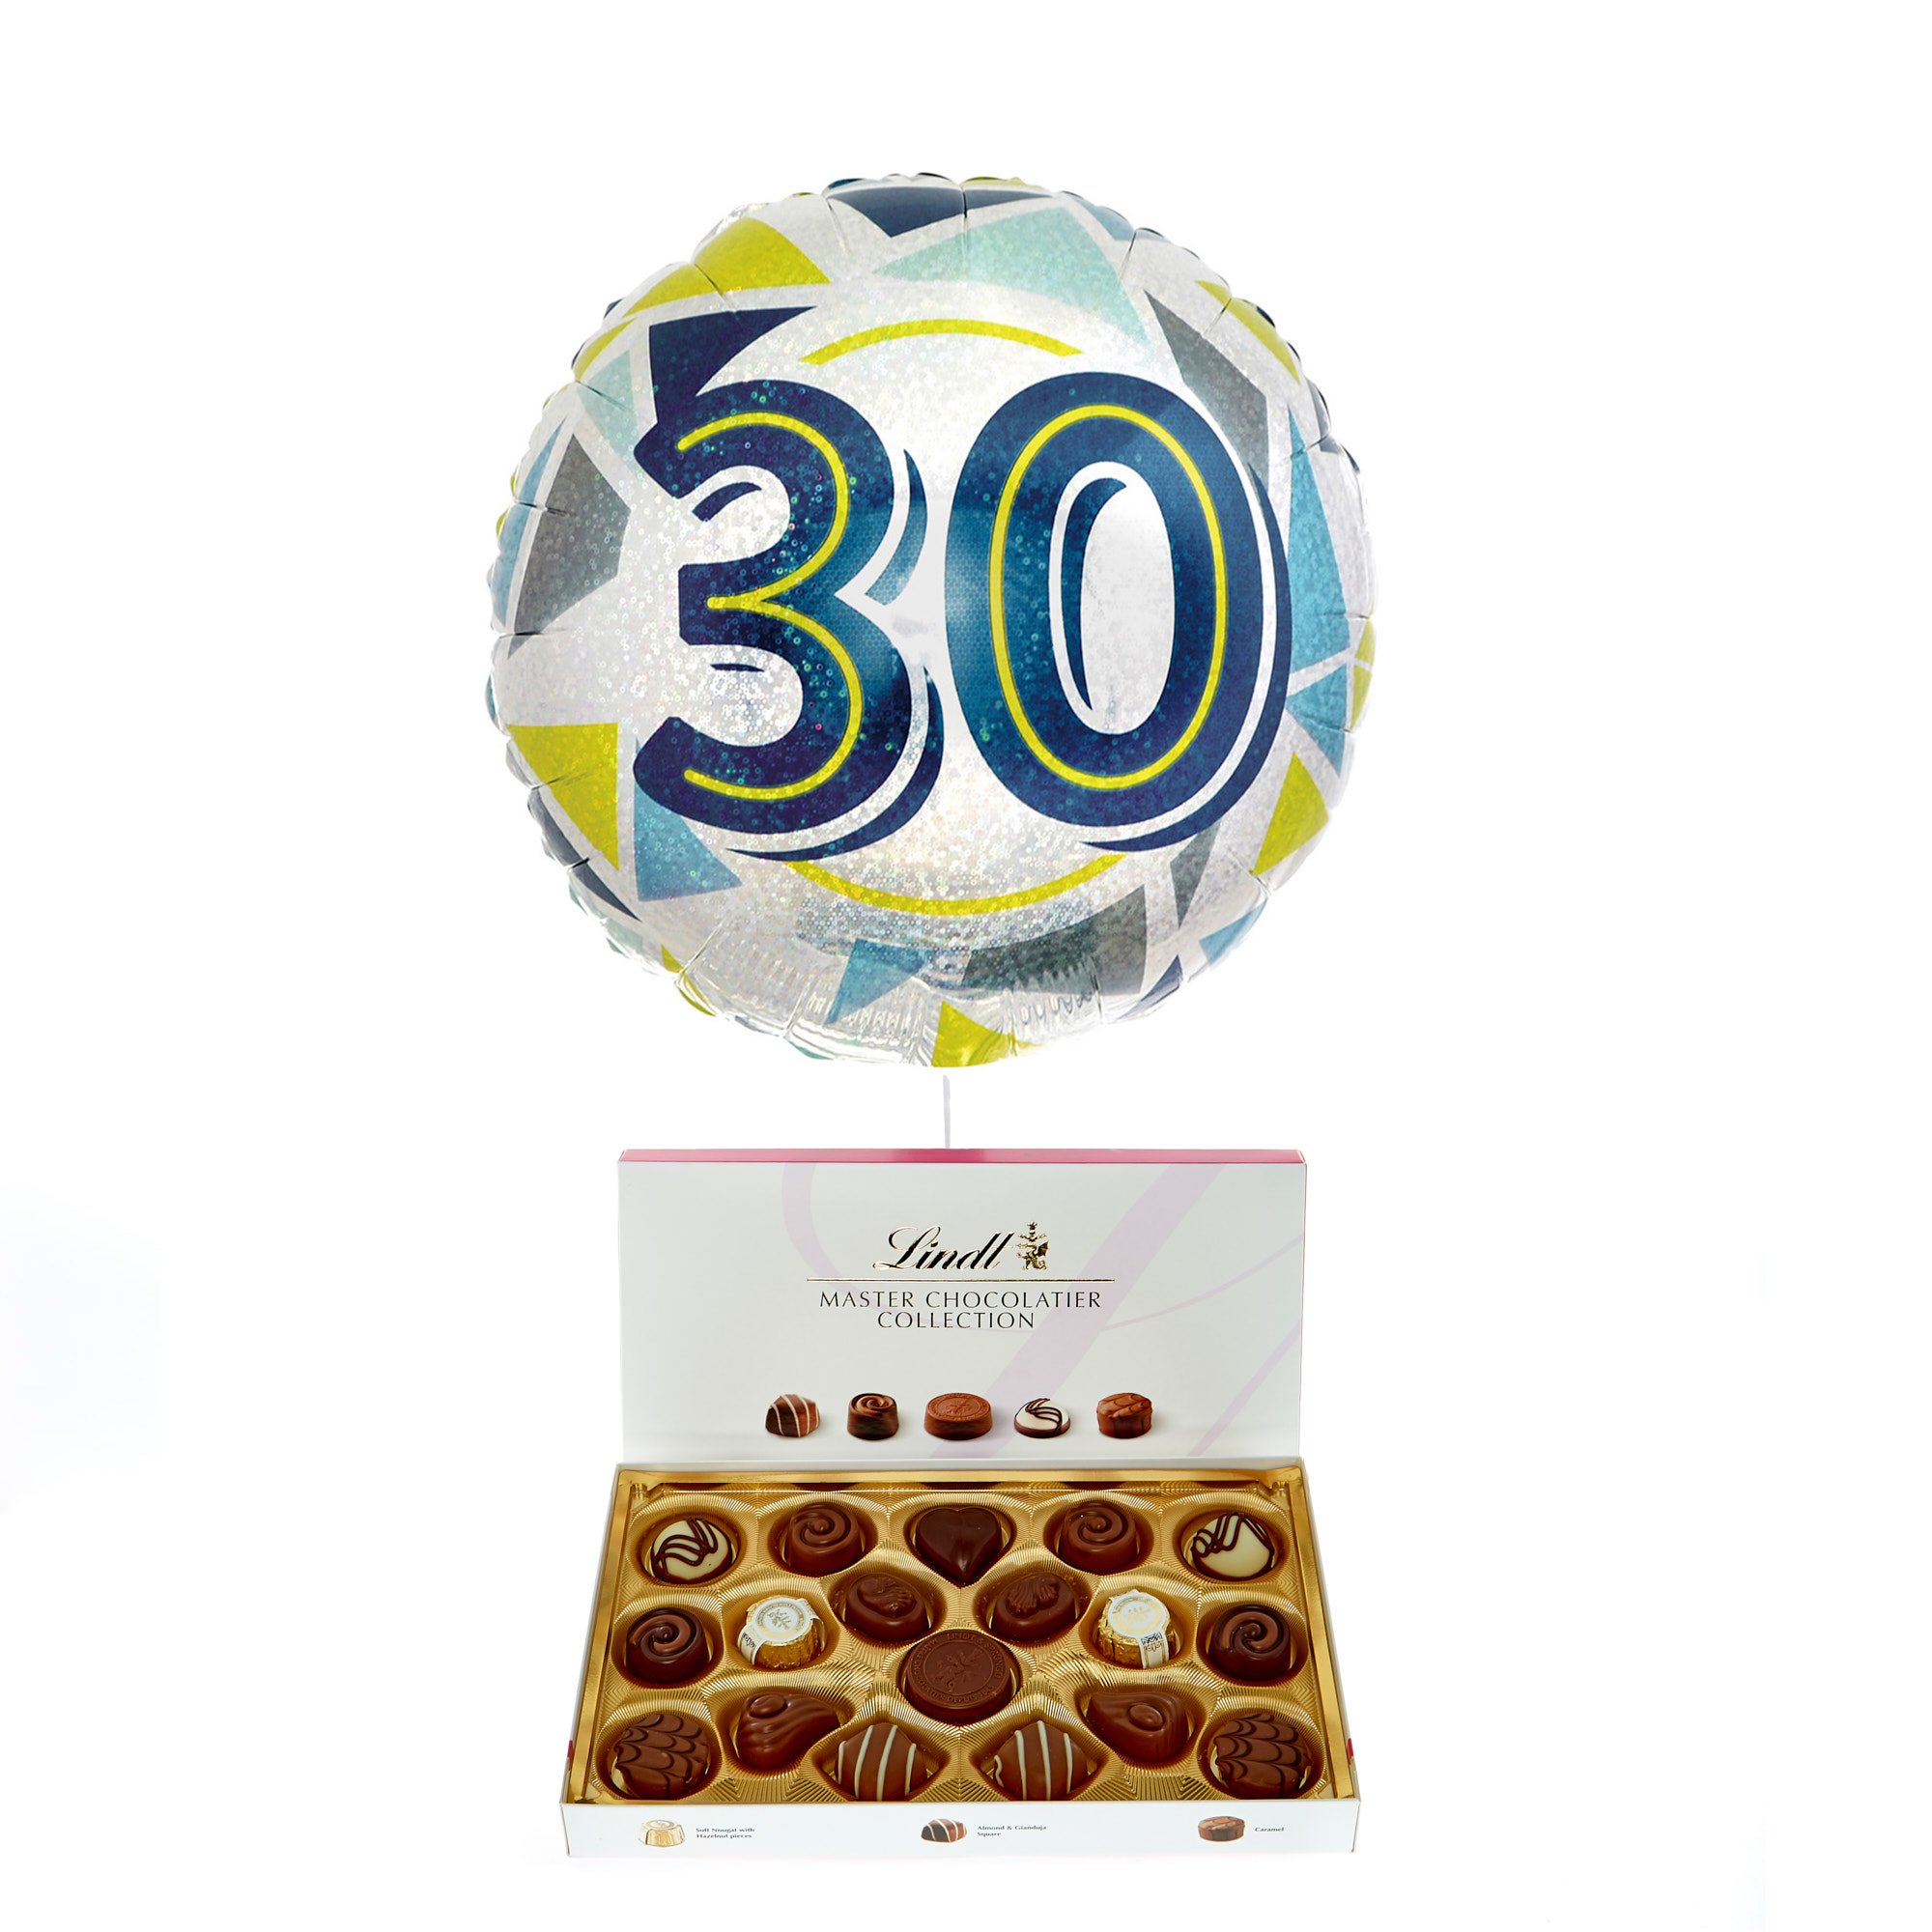 Geometric Blue & Yellow 30th Birthday Balloon & Lindt Chocolates - FREE GIFT CARD!